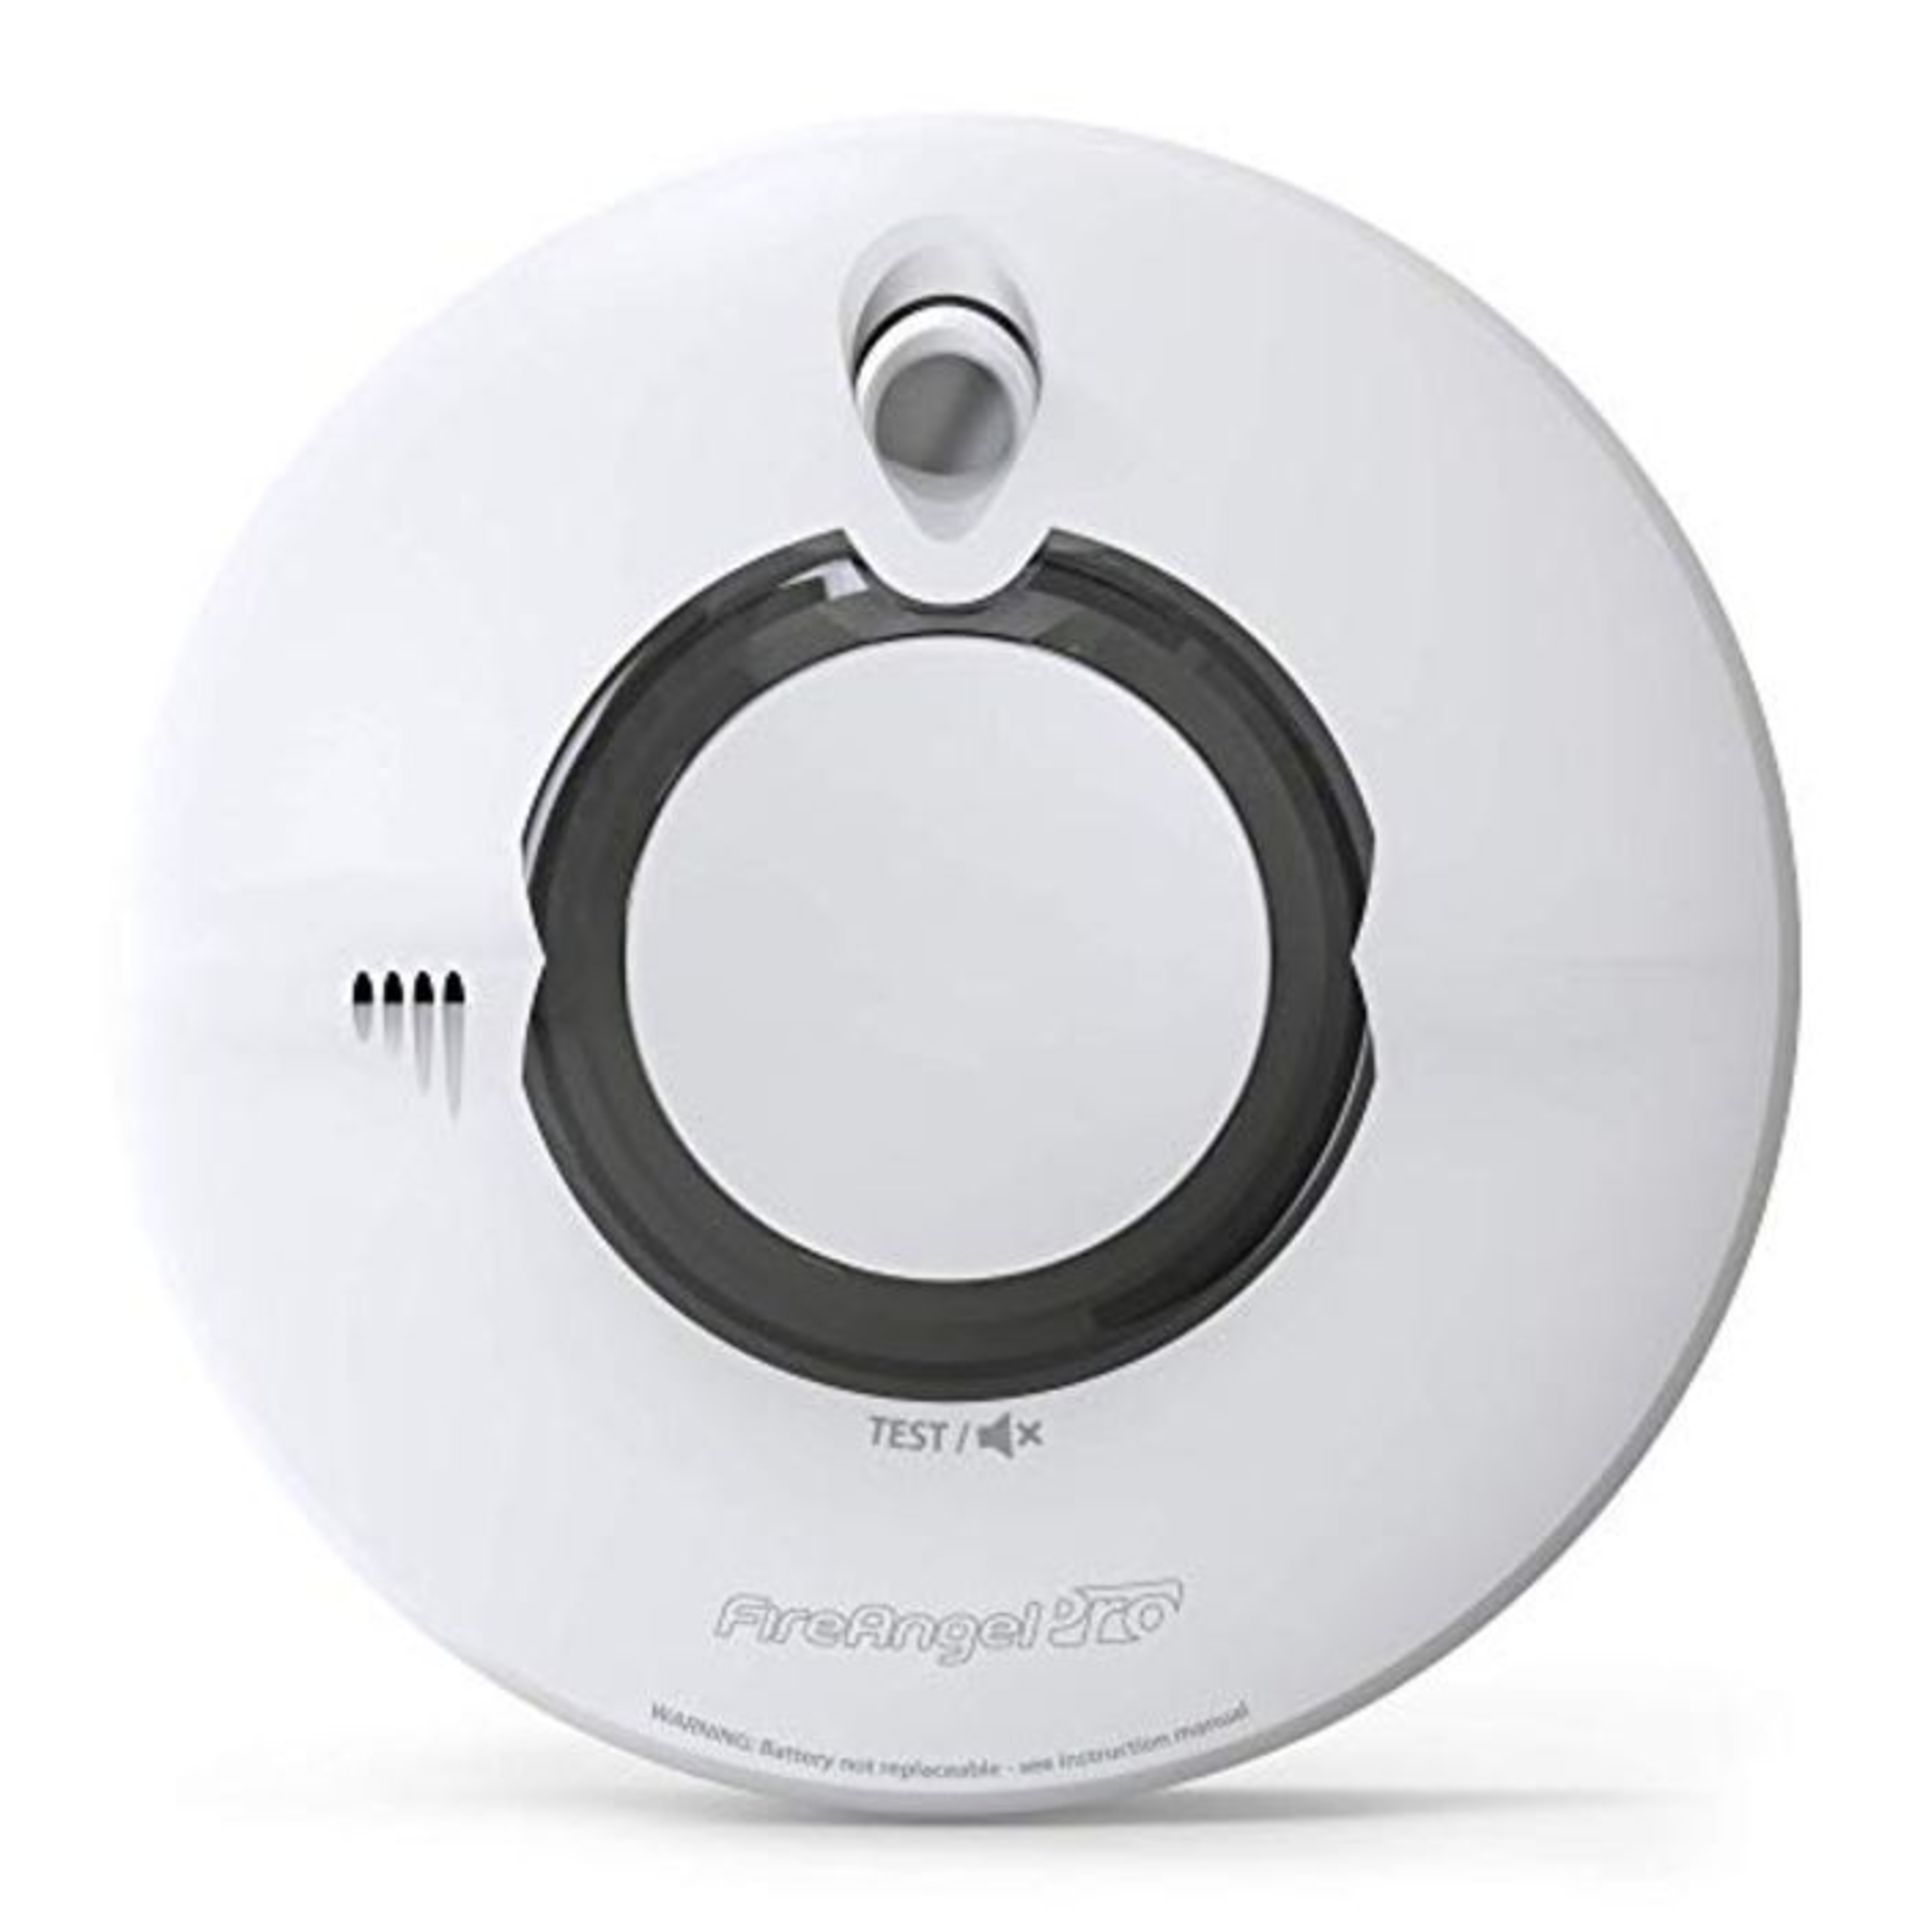 FireAngel Pro Connected Smart Smoke Alarm, Battery Powered with Wireless Interlink